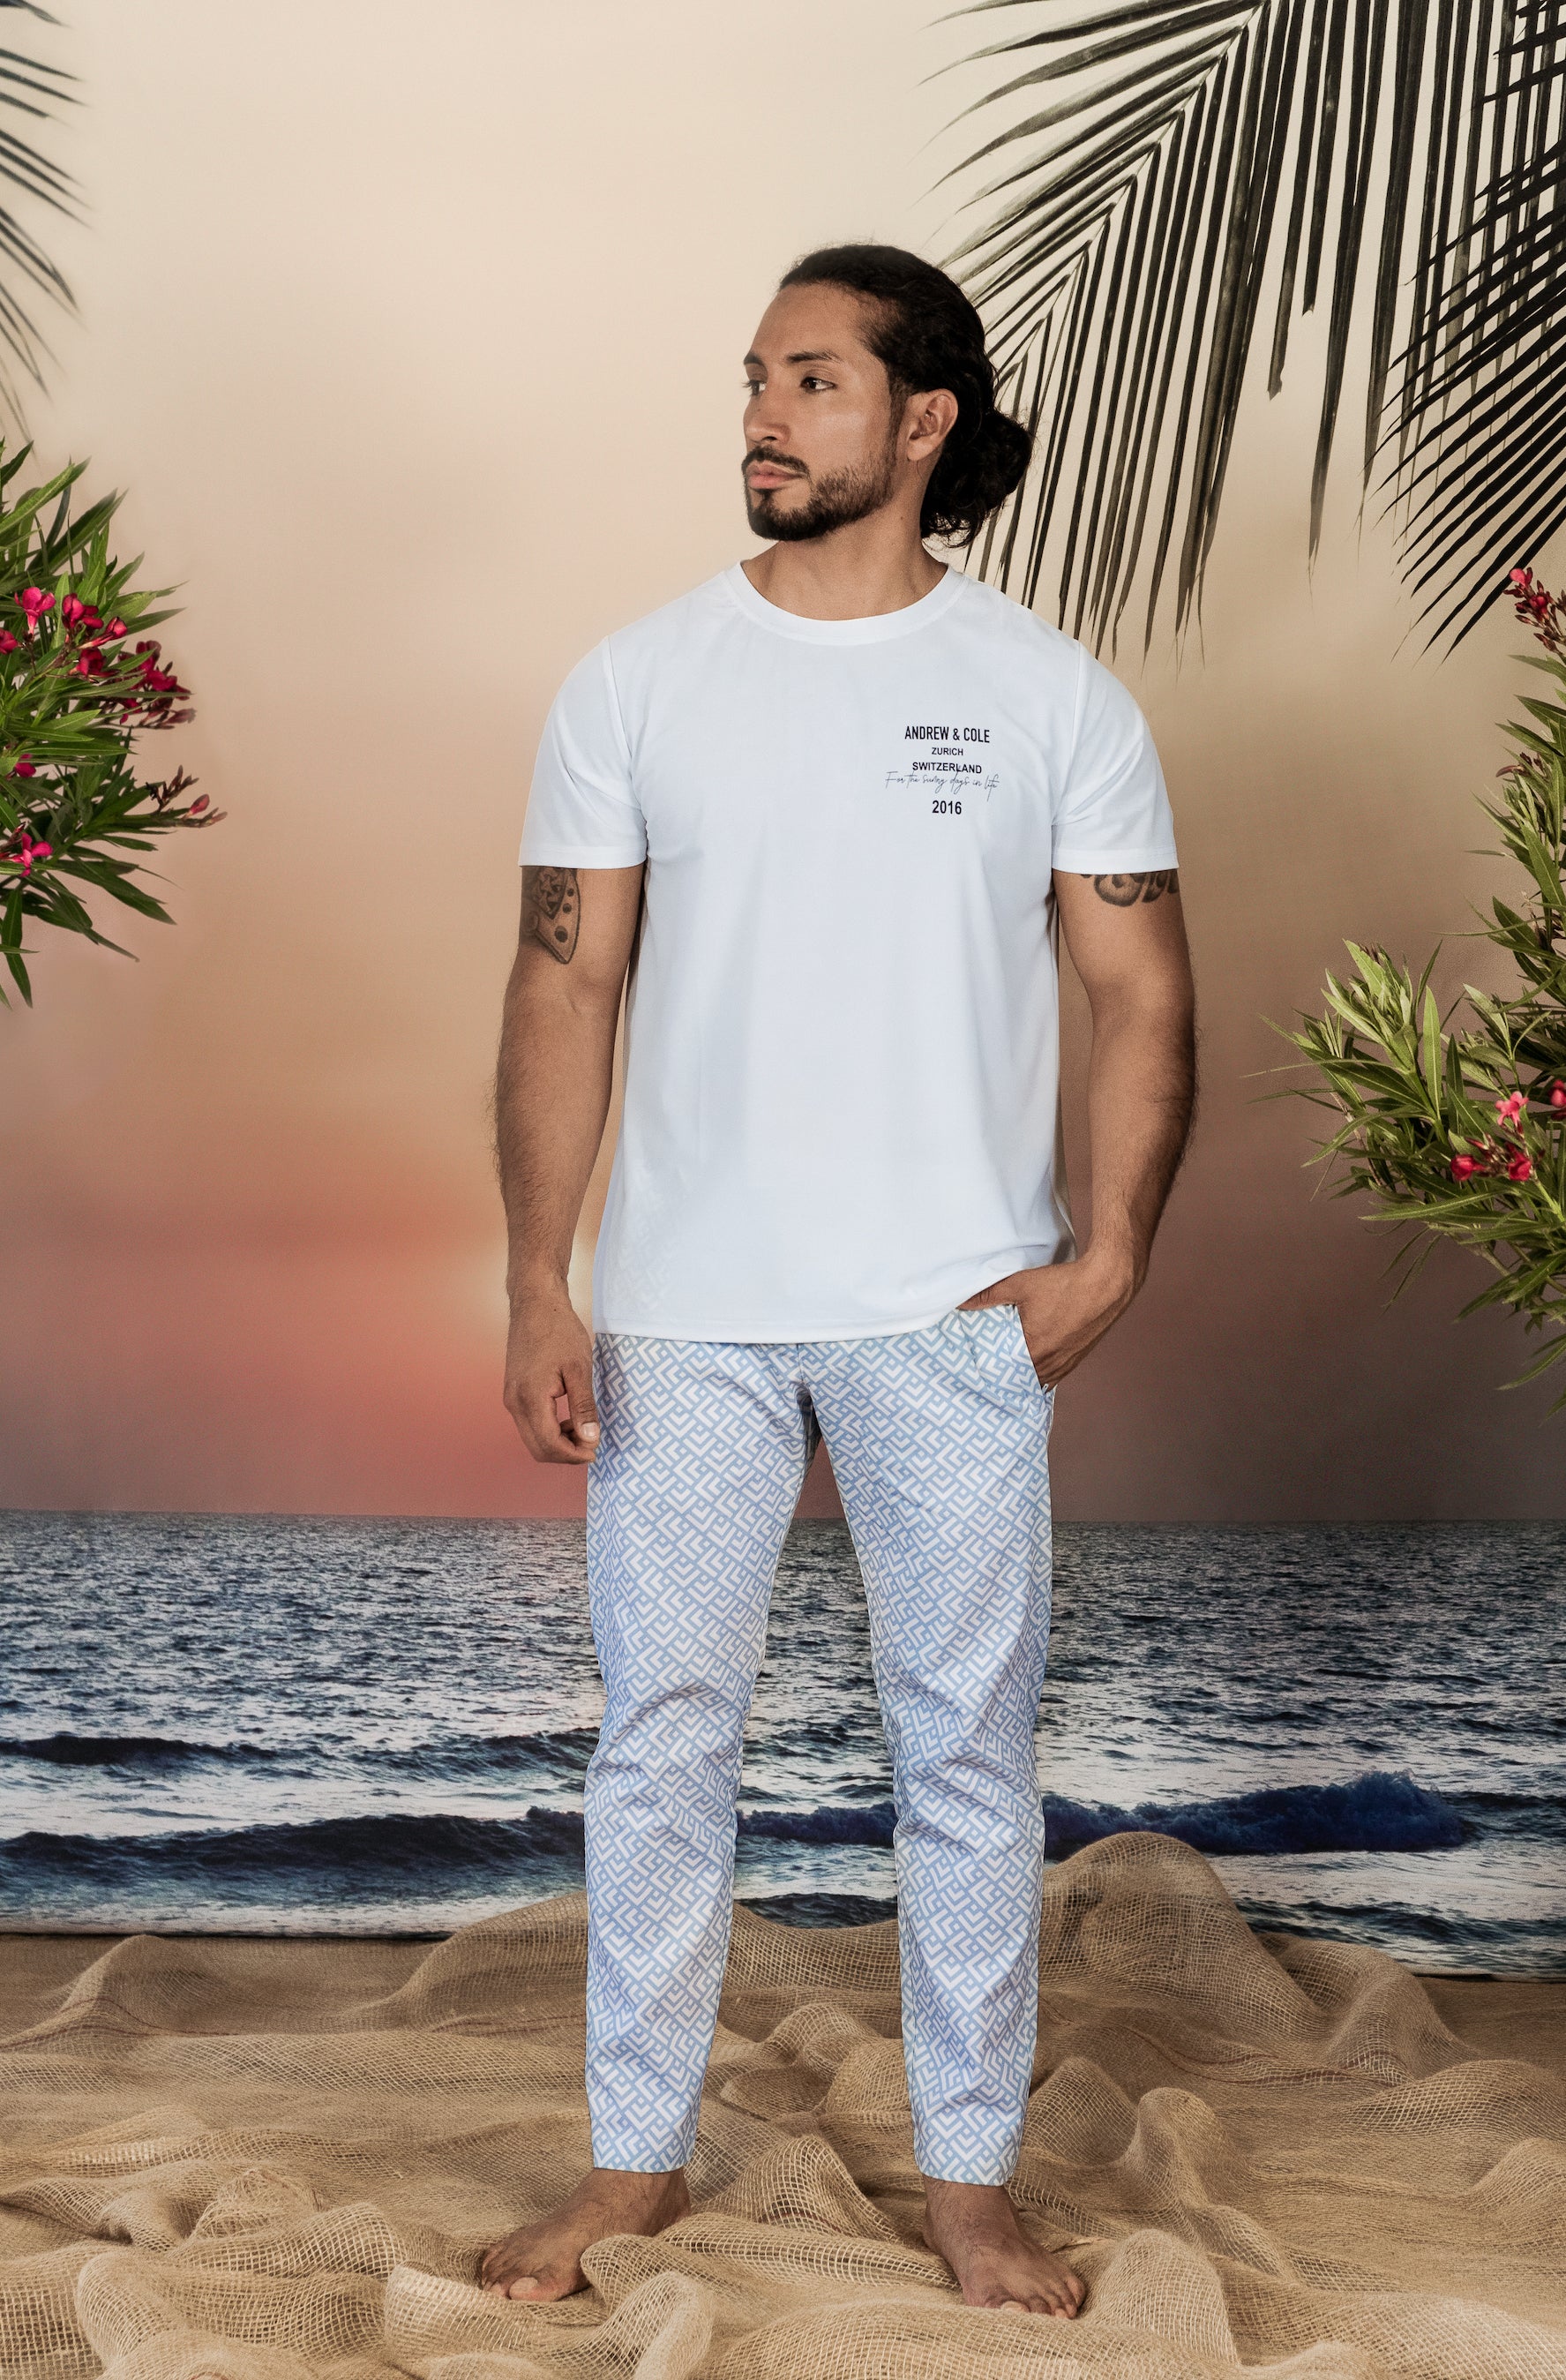 Model trägt weißes UV-T-shirt mit Palmenprint Frontansicht Andrew&Cole